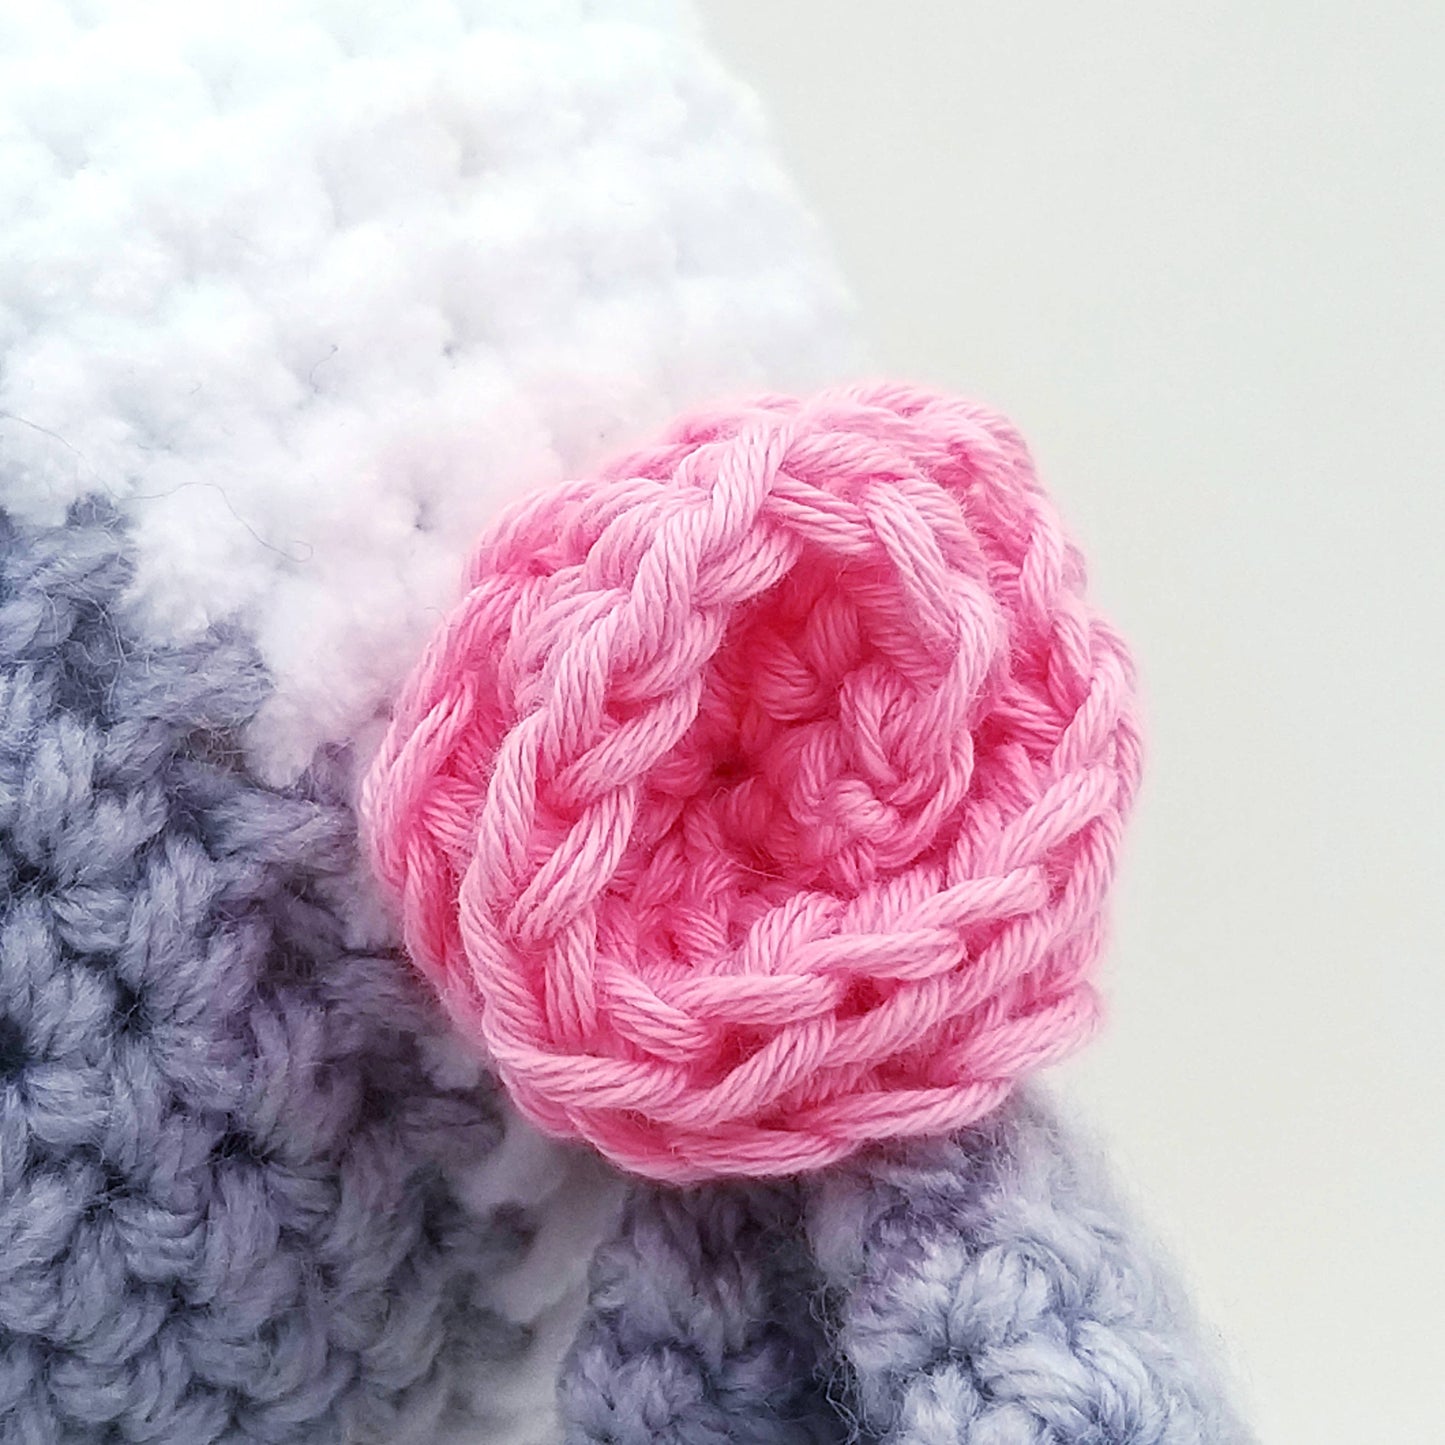 Crochet Flower Behind Lambs Ear